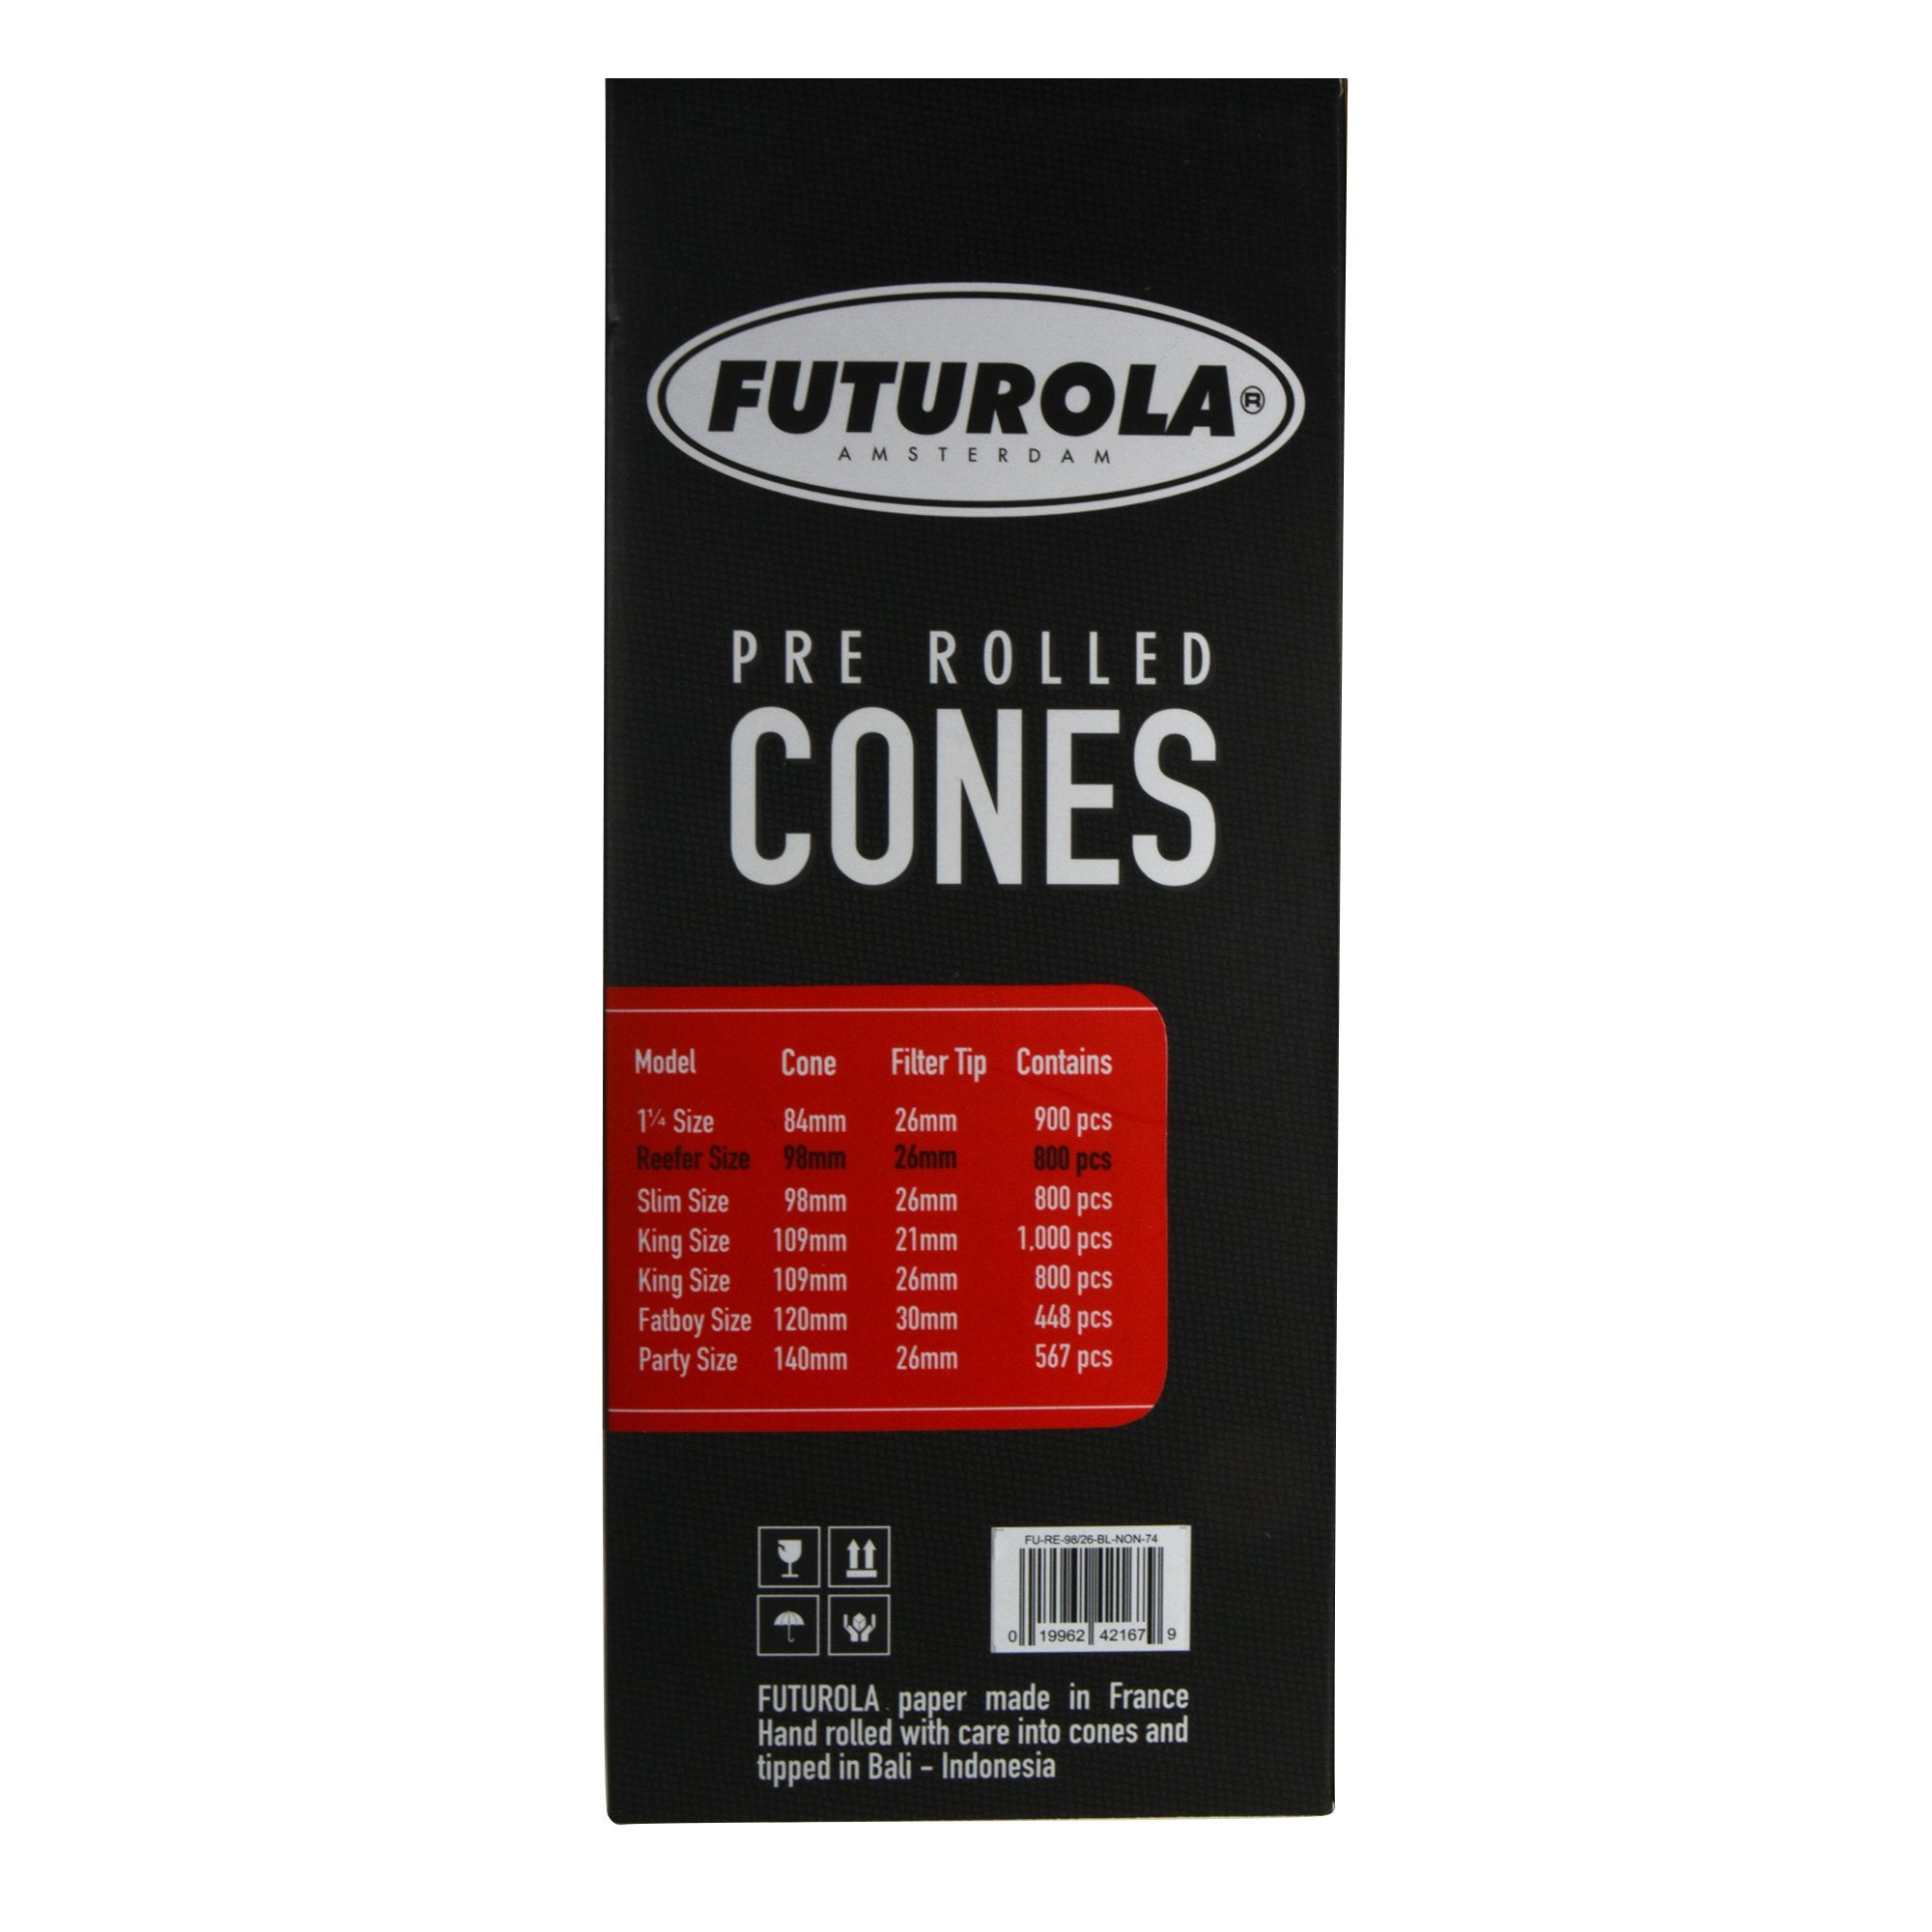 FUTUROLA | Reefer Size Pre-Rolled Cones | 98mm - Classic White Paper - 800 Count - 4